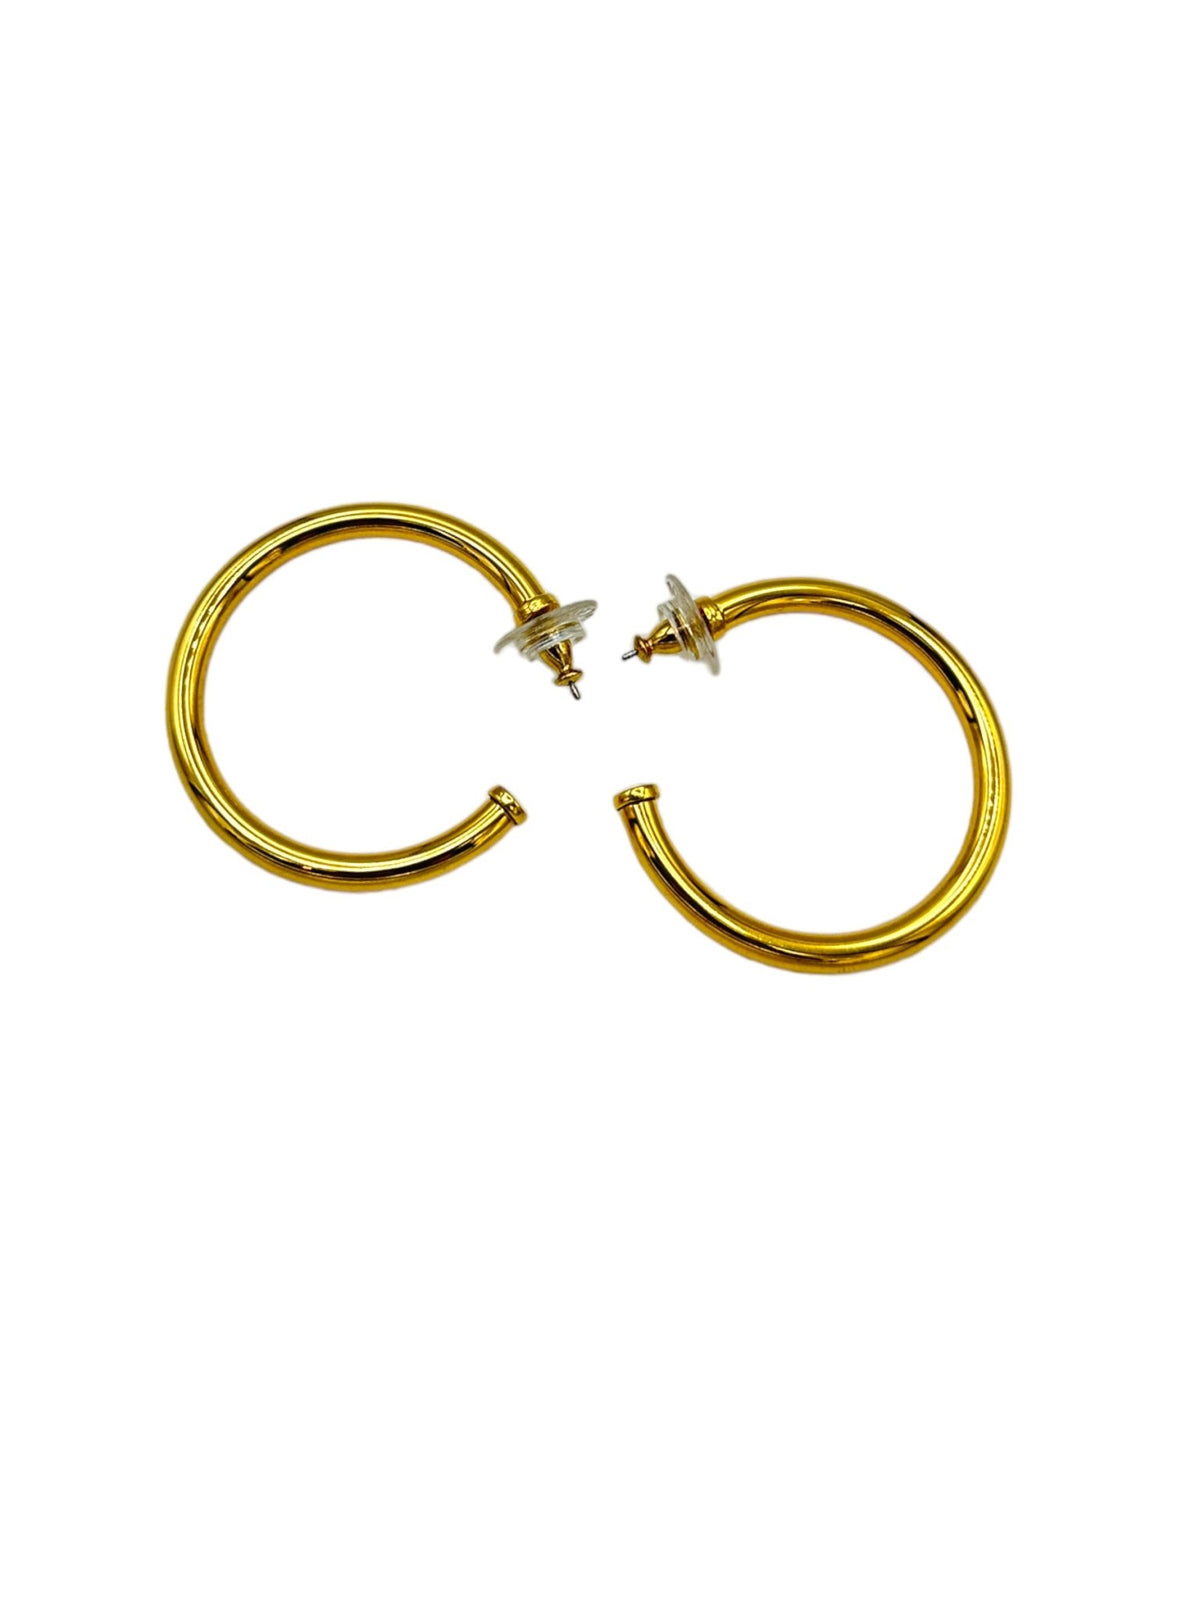 Large Monet Gold Hoop Pierced Earrings - 24 Wishes Vintage Jewelry